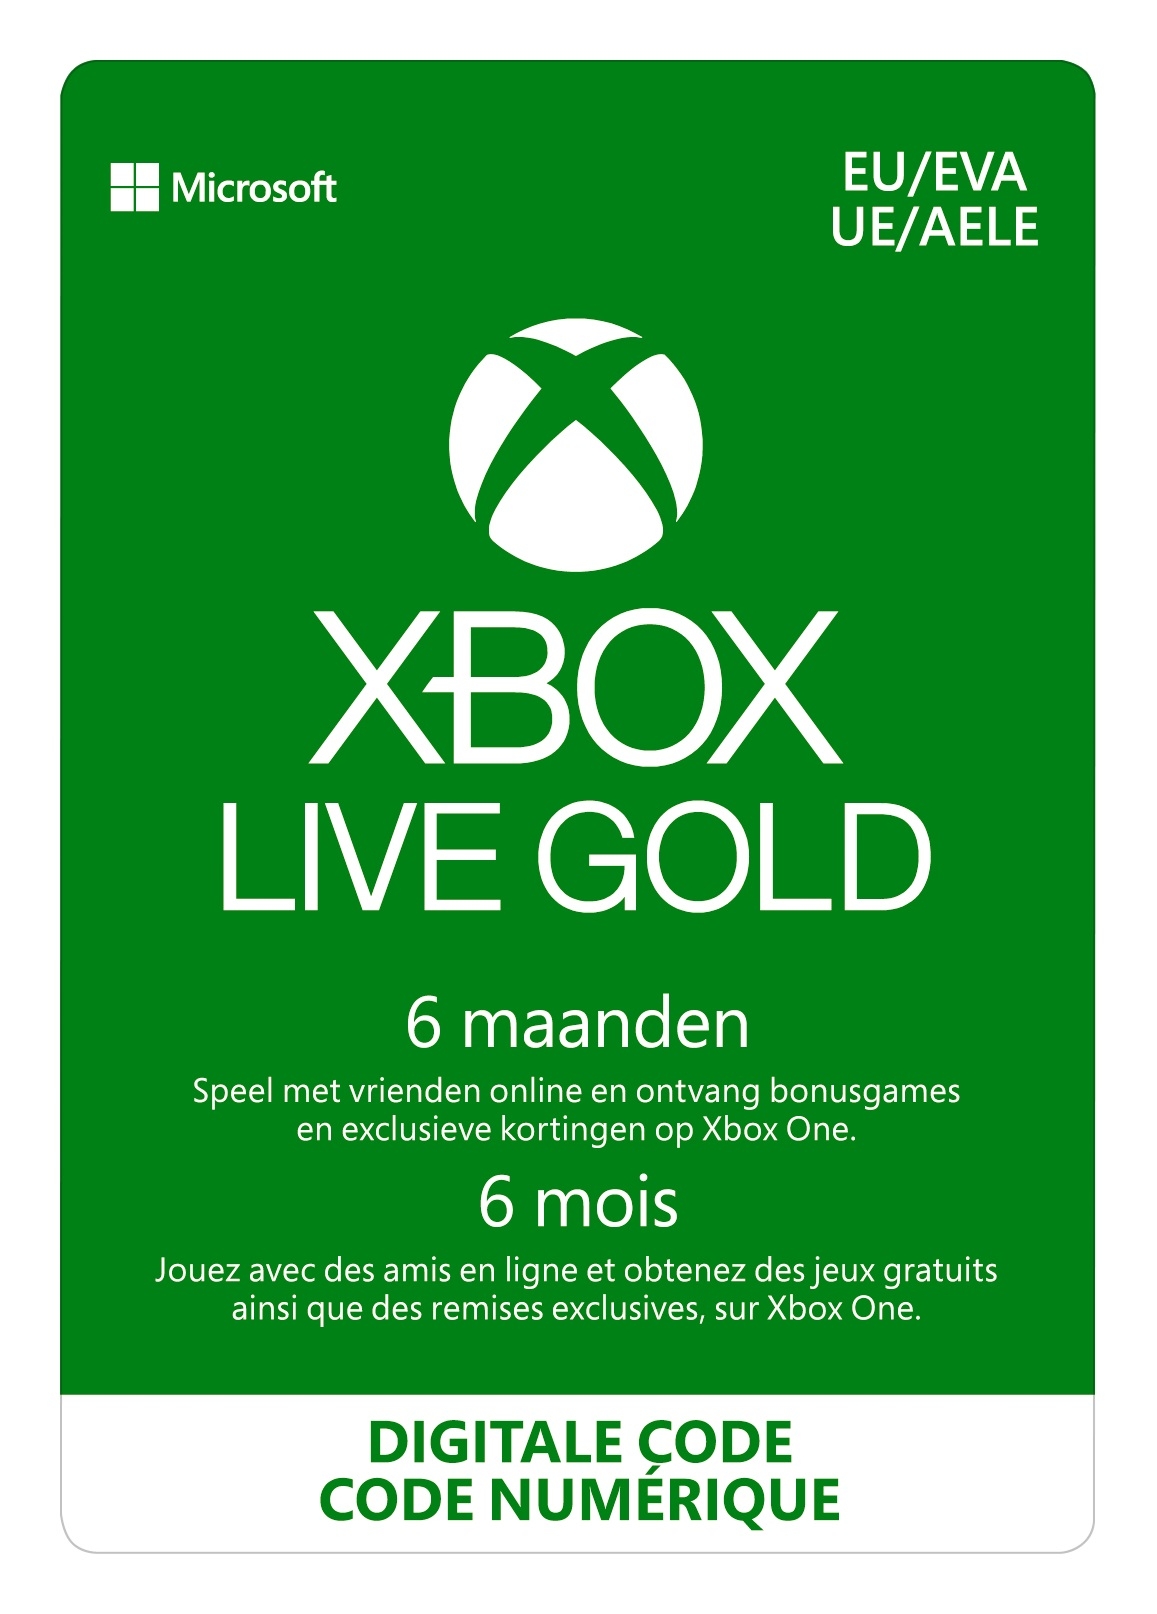 Xbox Live Gold 6 maanden EU